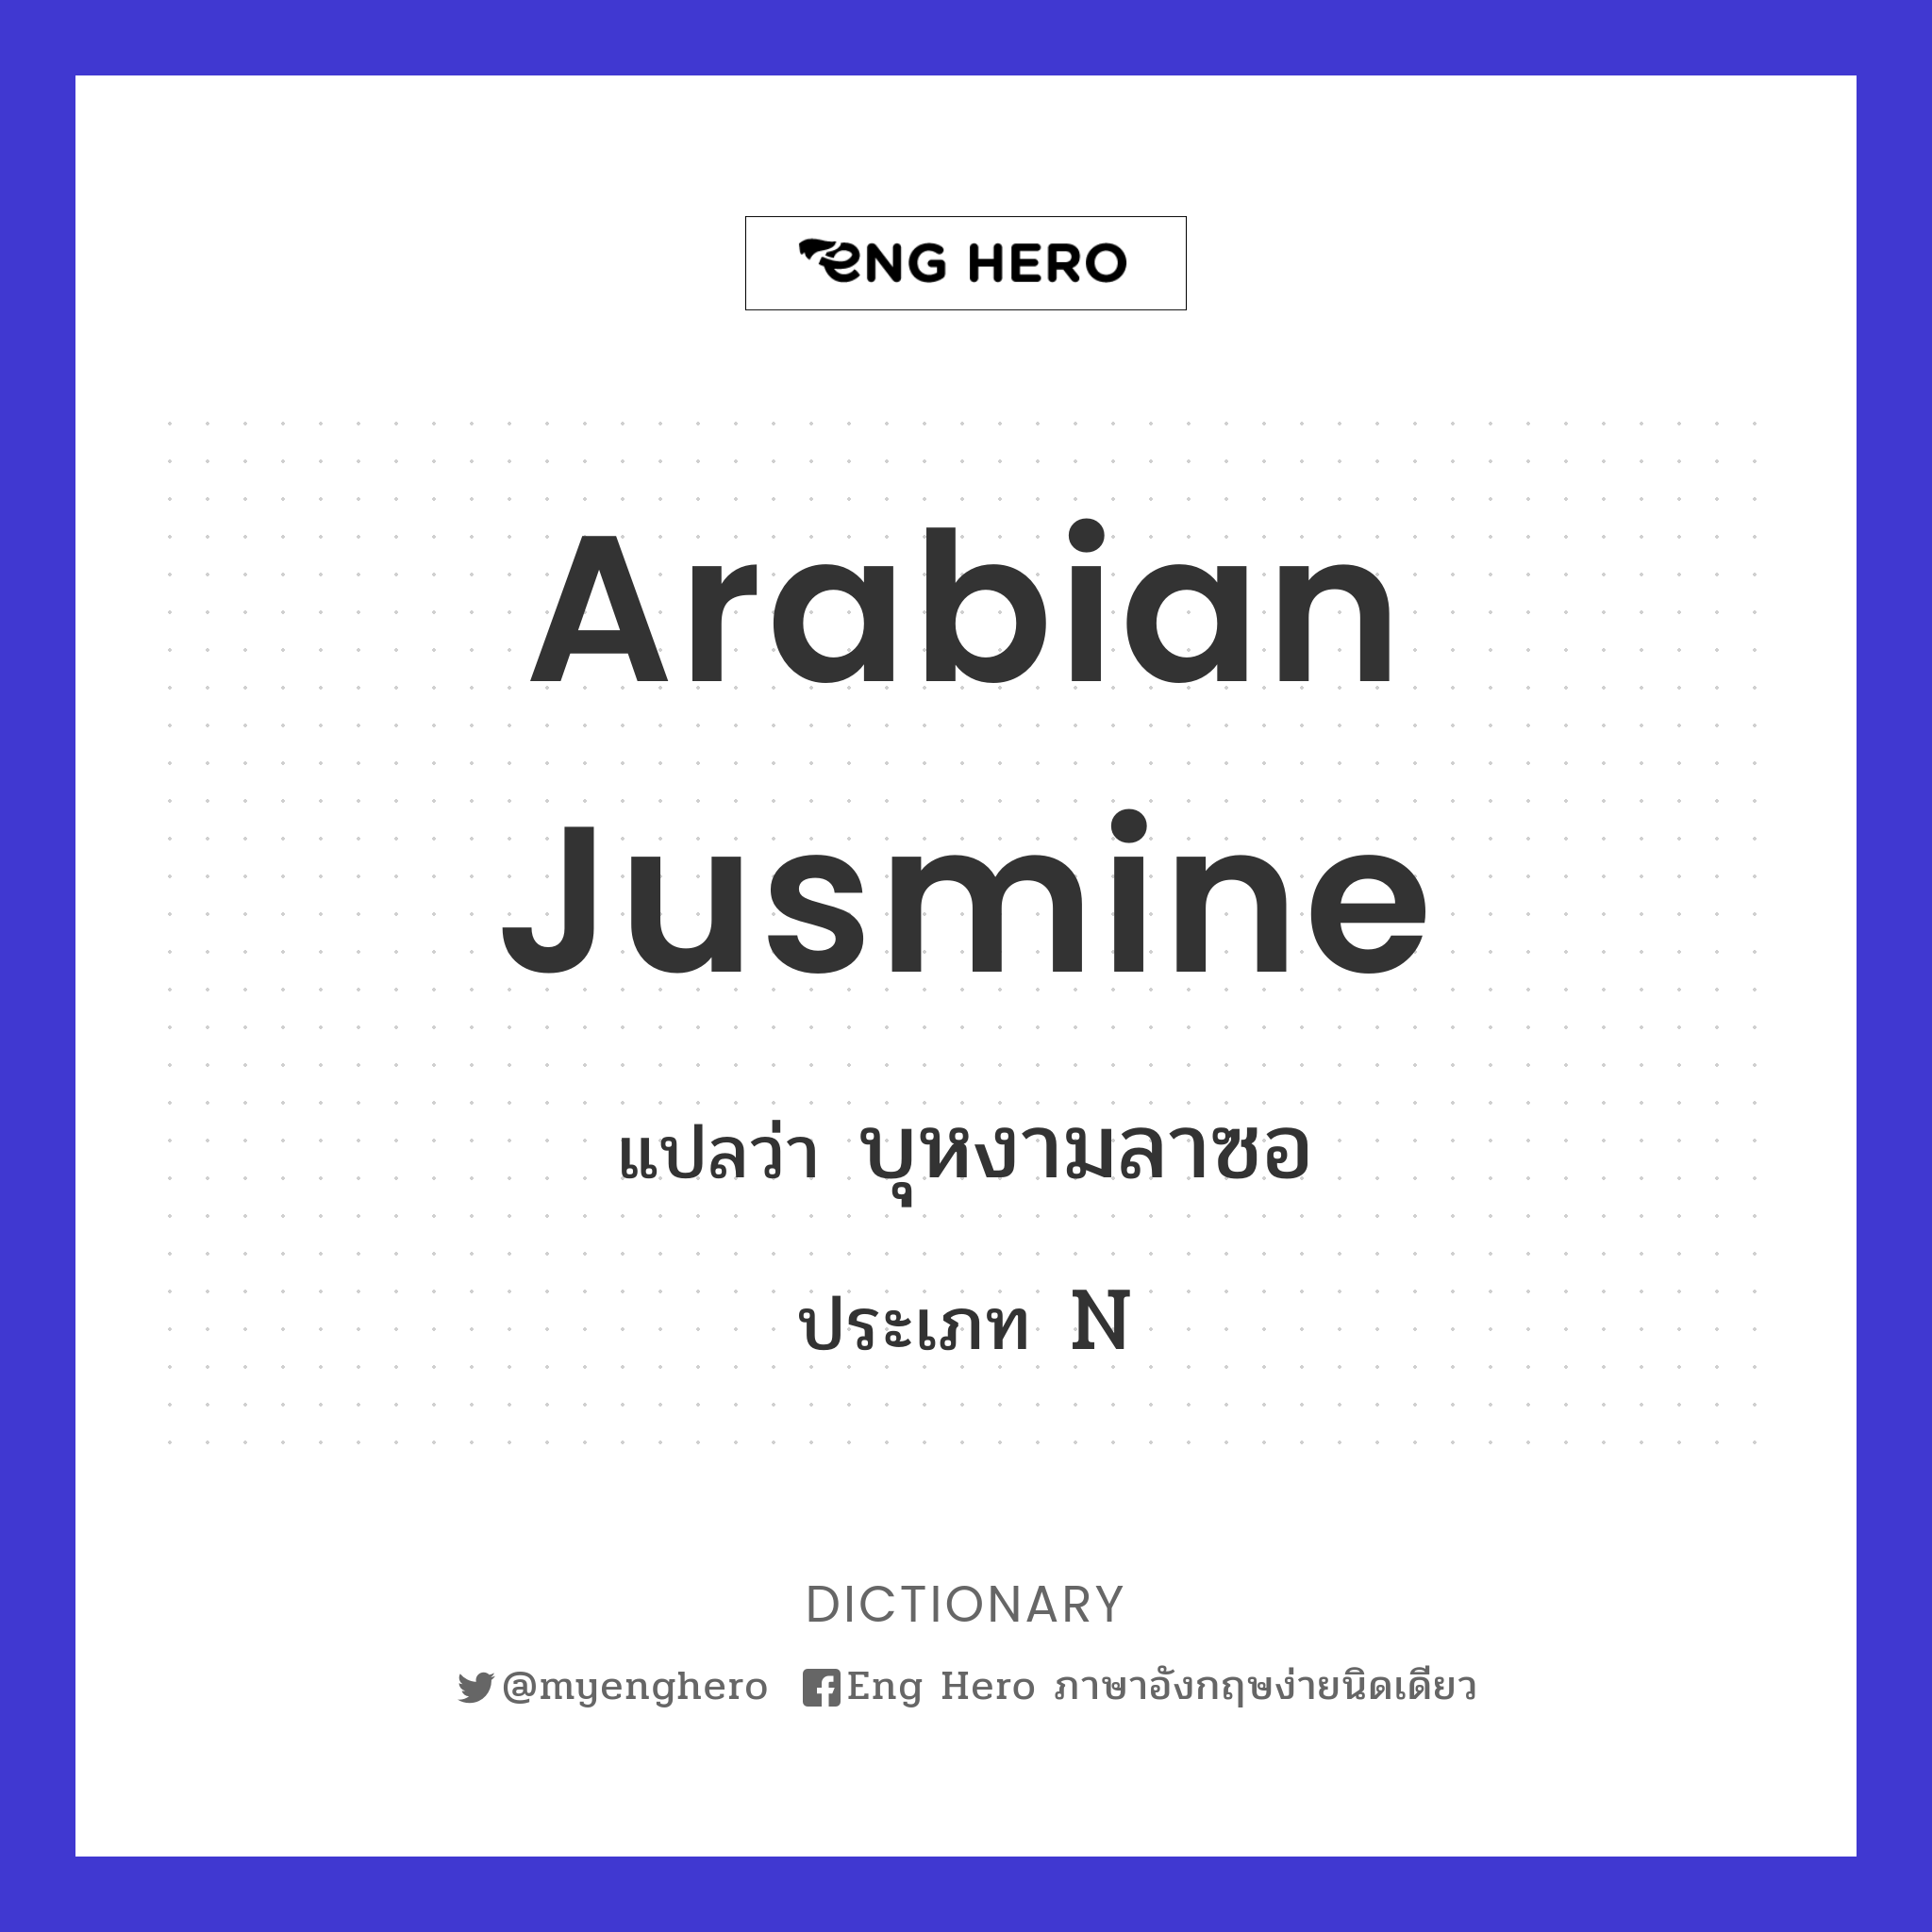 Arabian jusmine